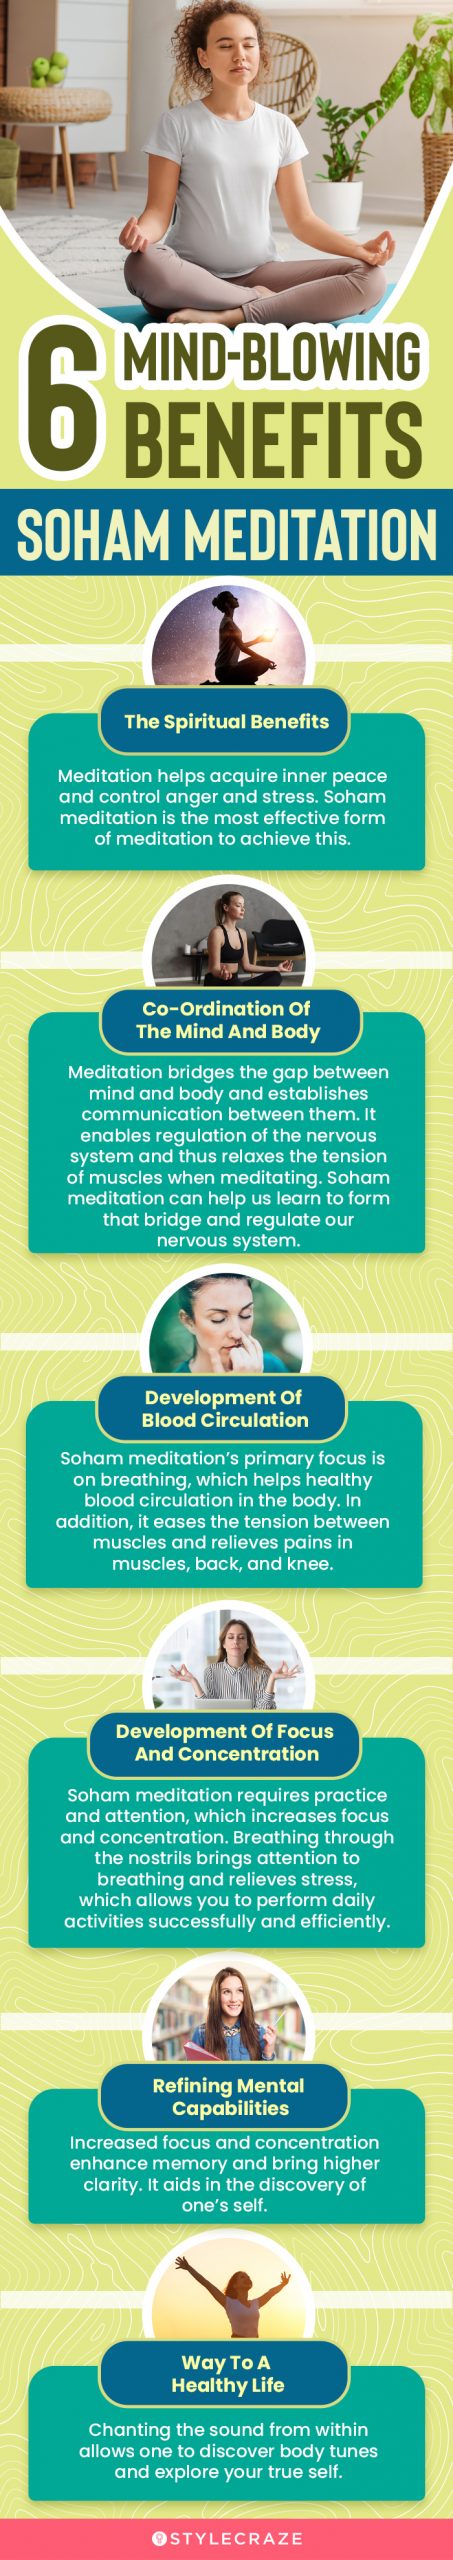 6 mind blowing benefits of soham meditation (infographic)